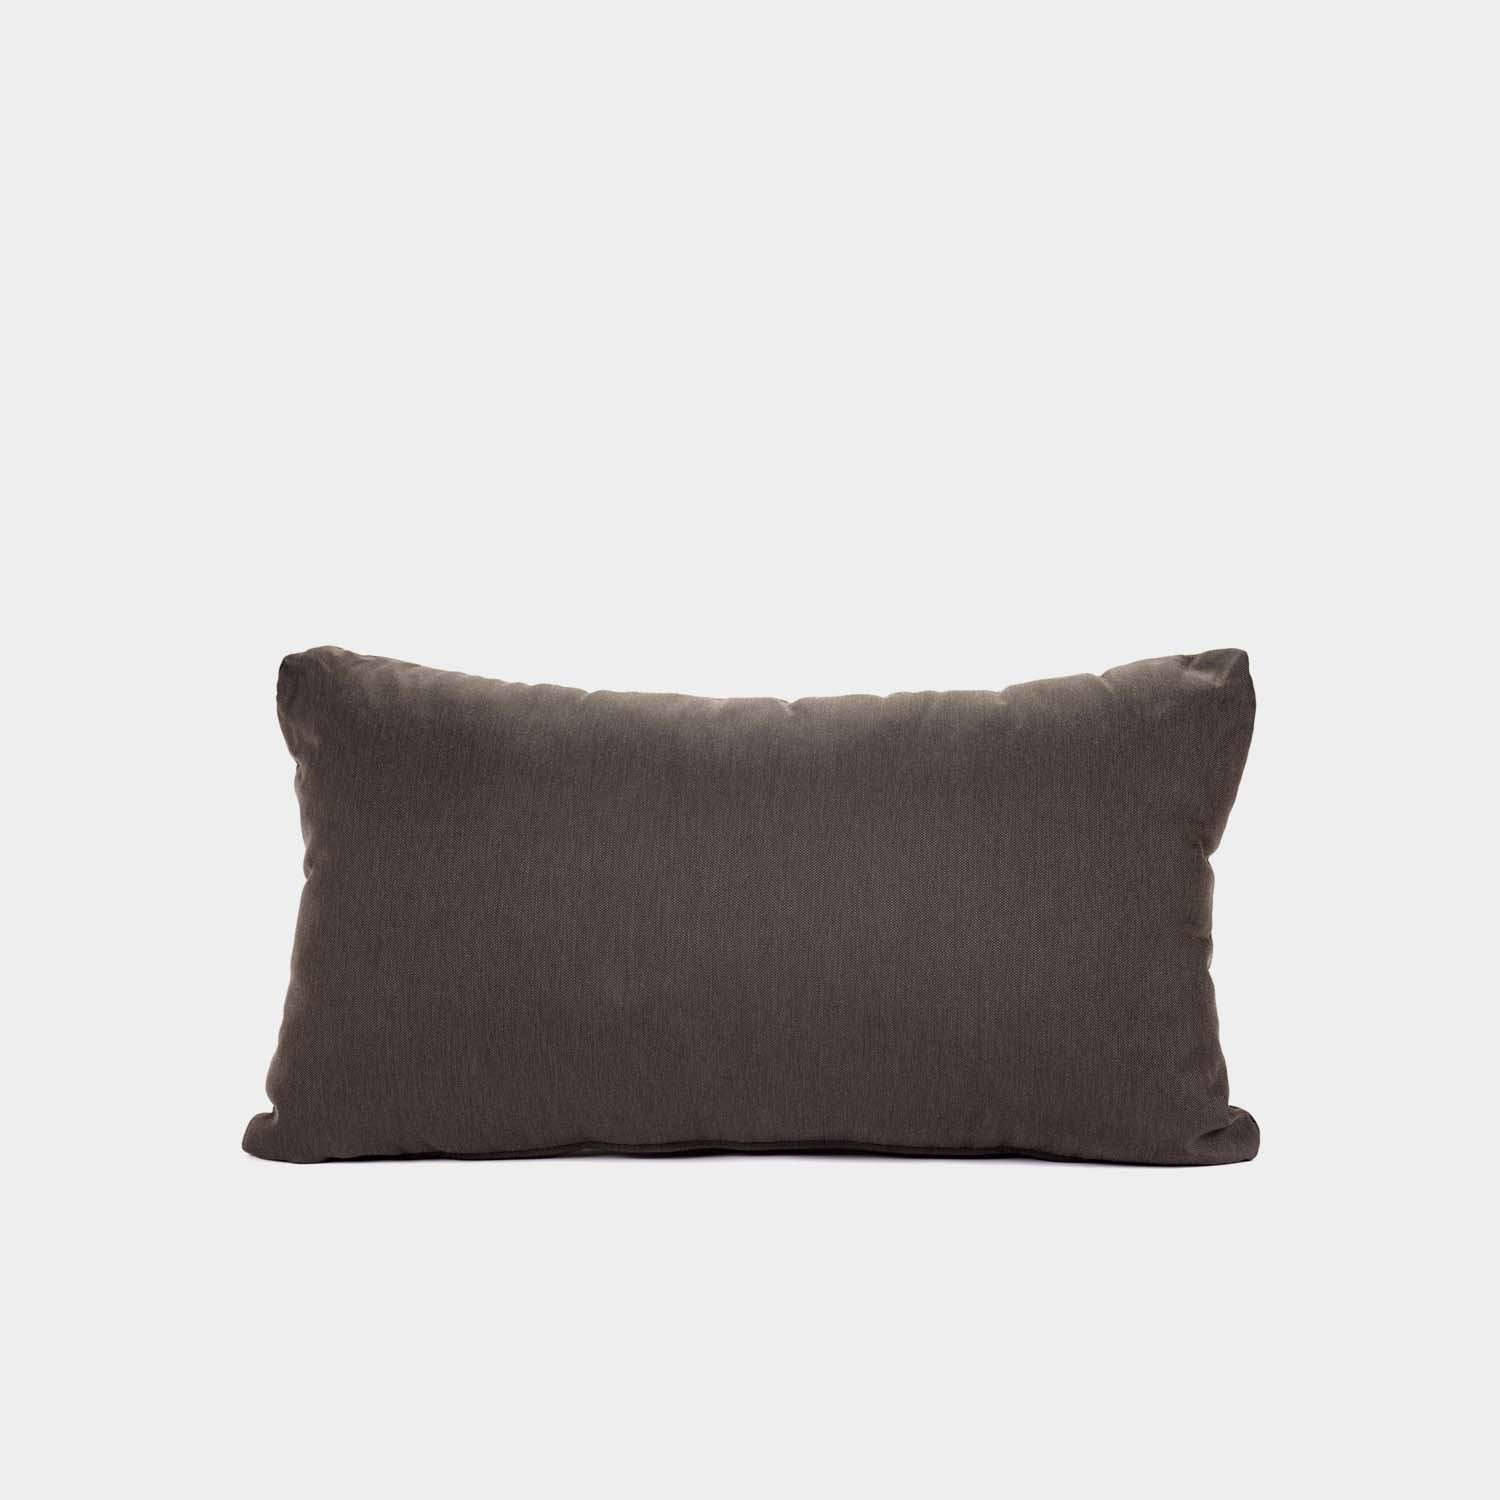 Decorative Cushion, Rectangular, Outdoor, Black Brown